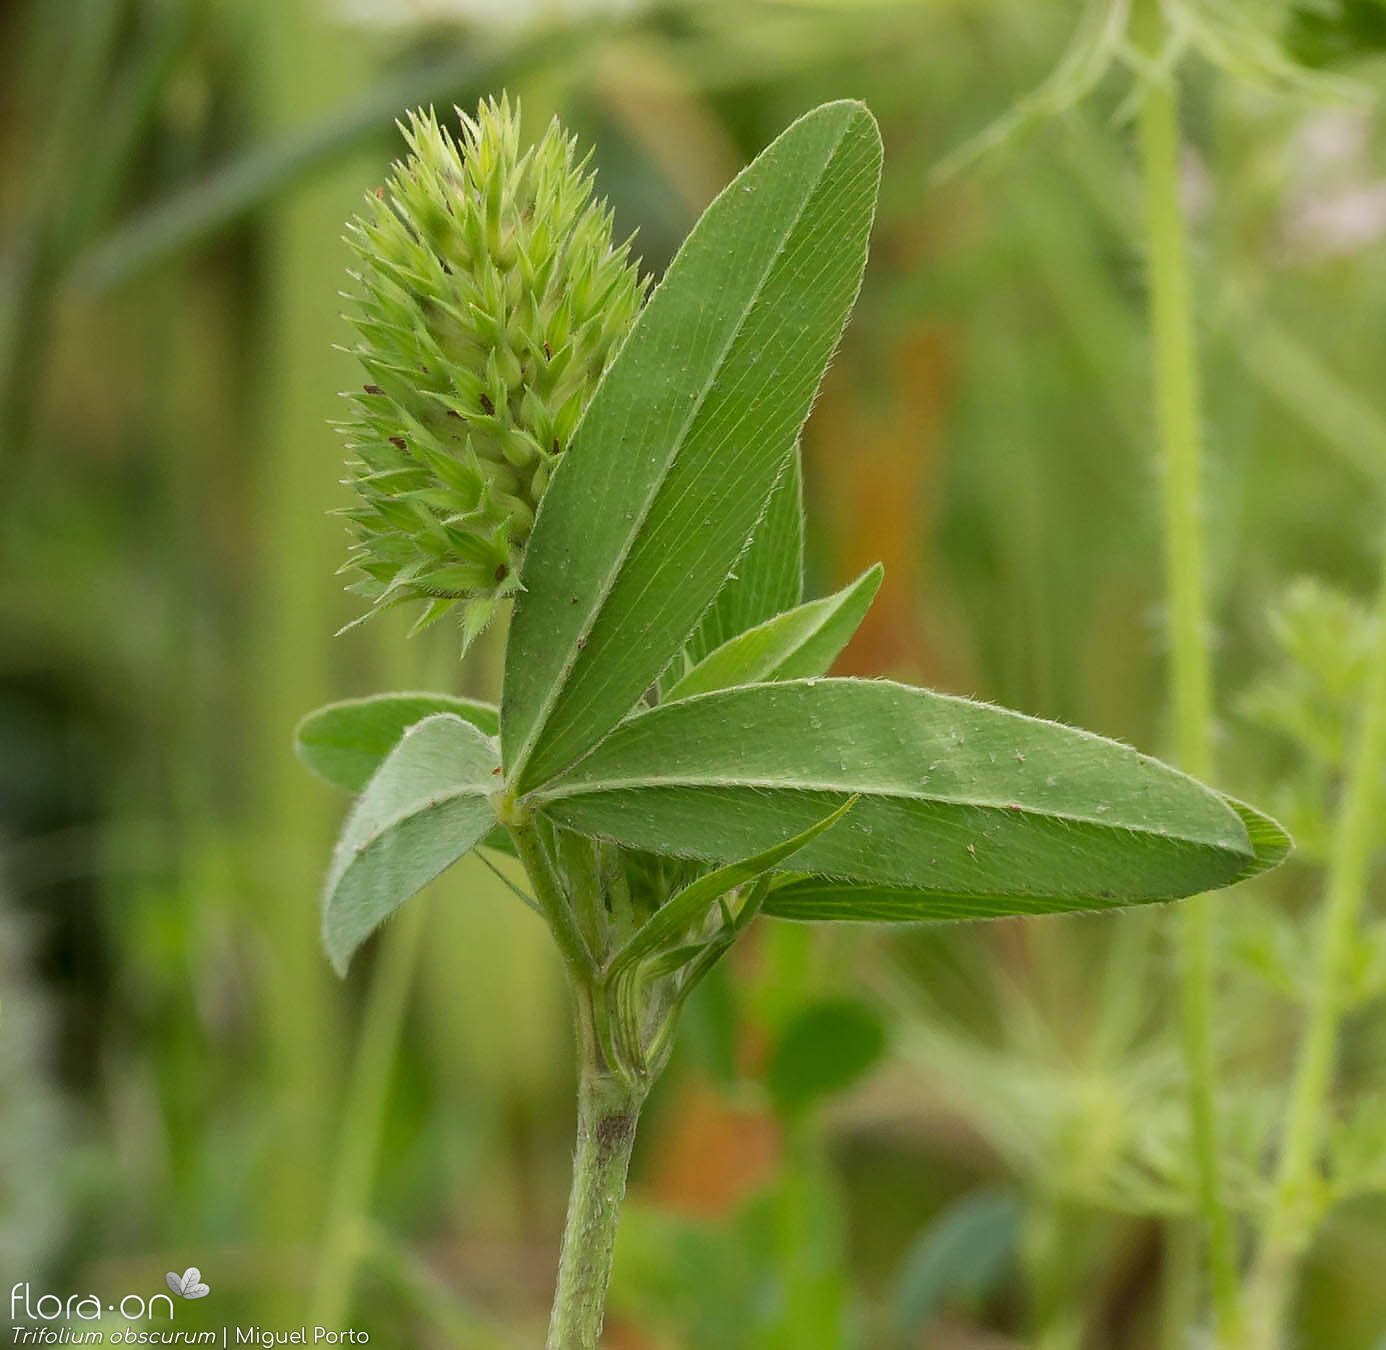 Trifolium obscurum - Flor (geral) | Miguel Porto; CC BY-NC 4.0